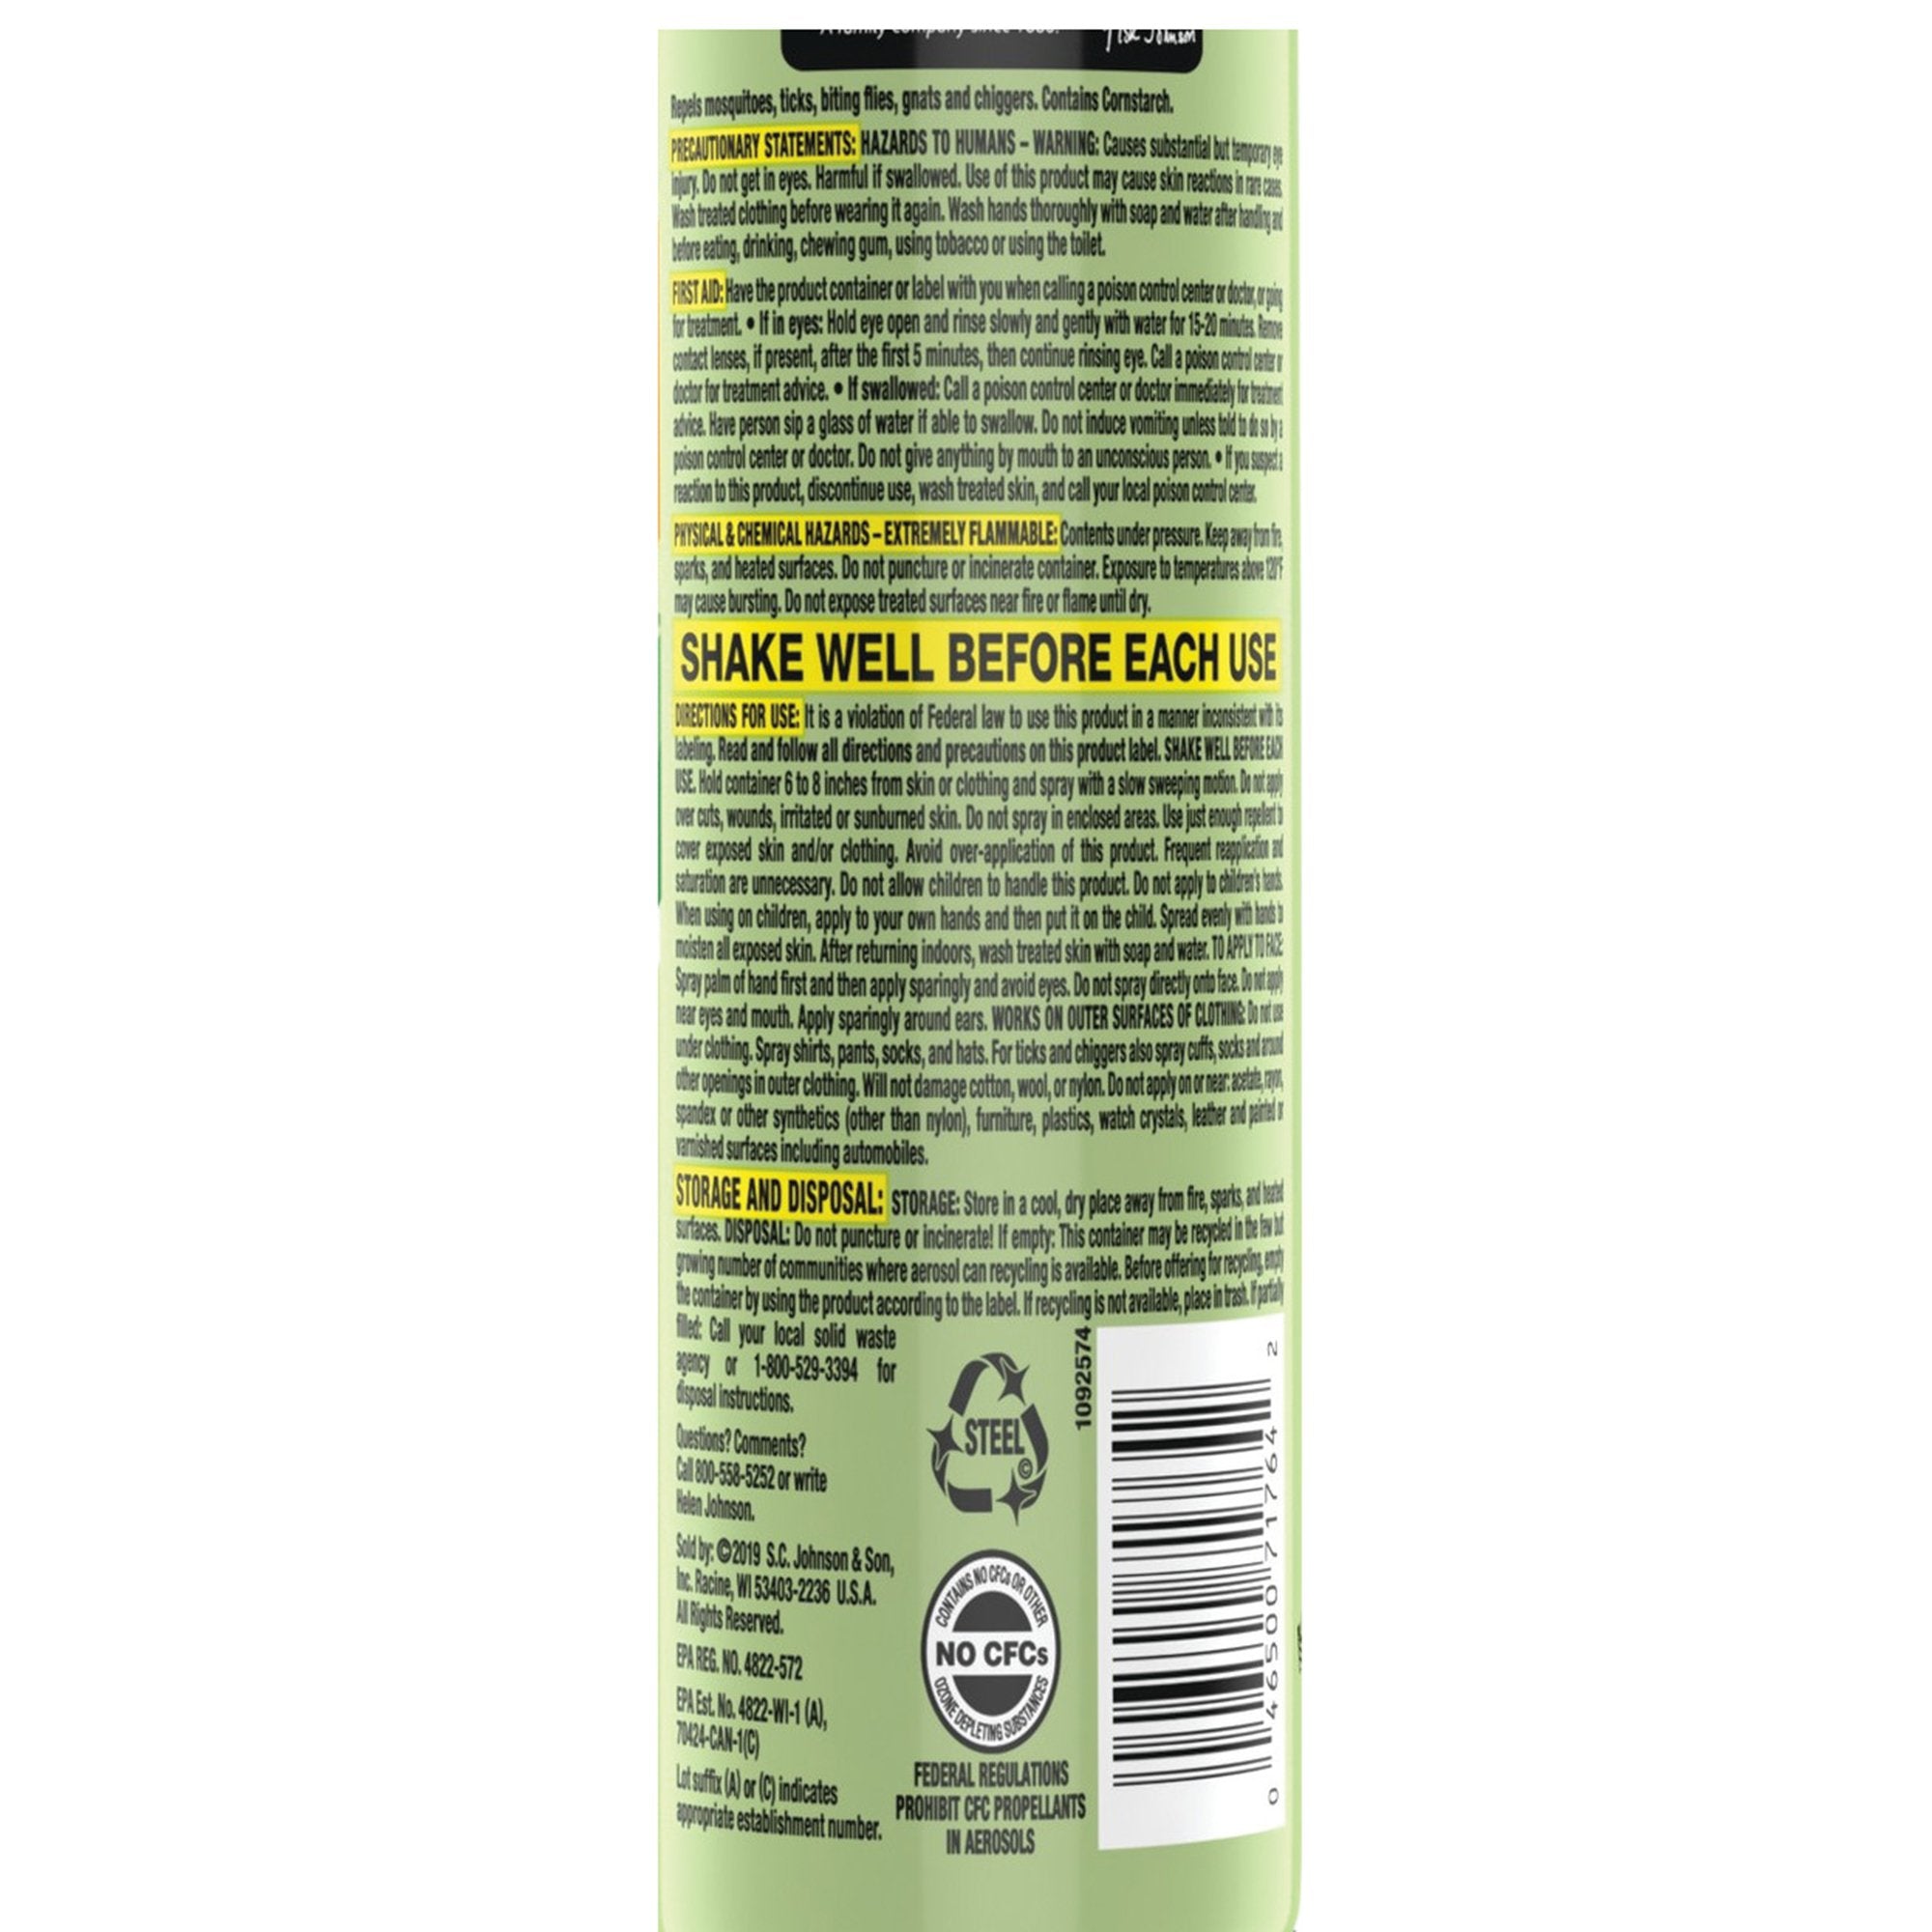 Insect Repellent Off!® Deep Woods® Dry Topical Liquid 4 oz. Aerosol Can